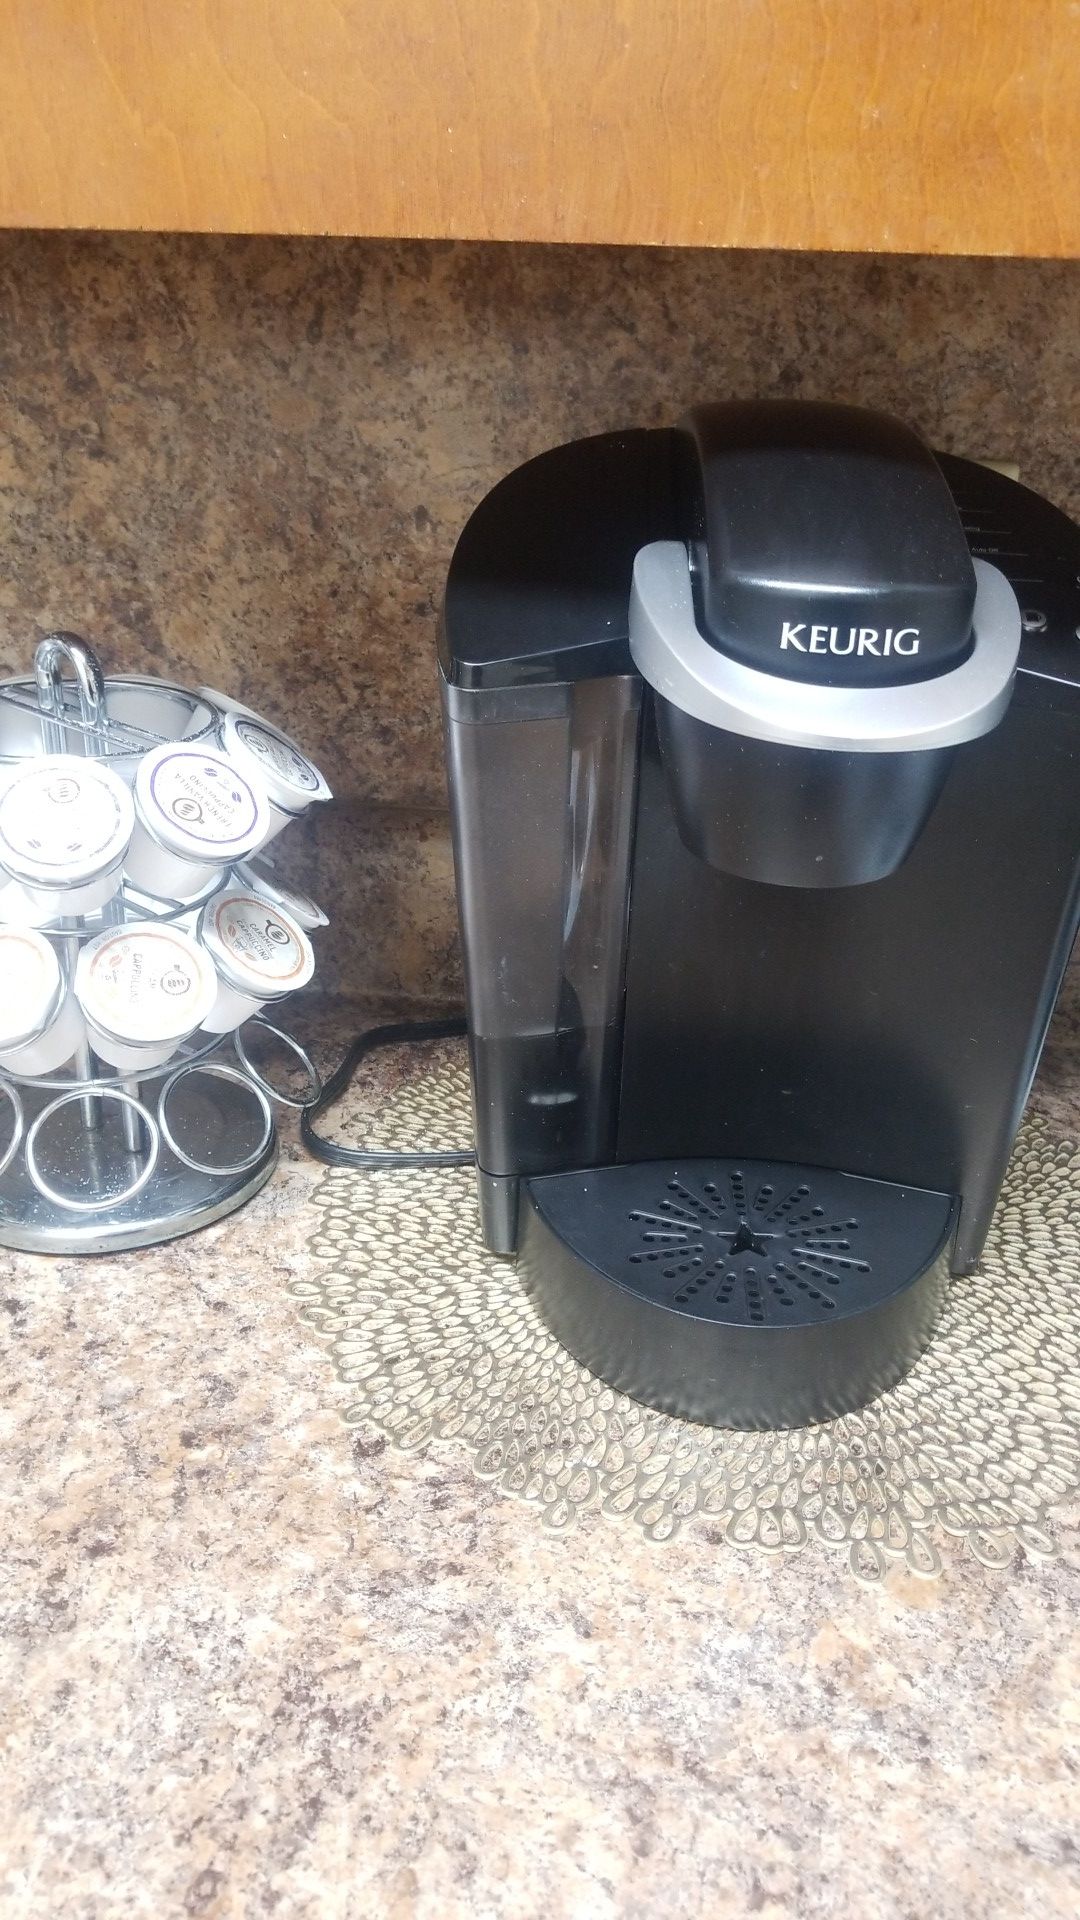 Keurig coffee maker with coffee holder